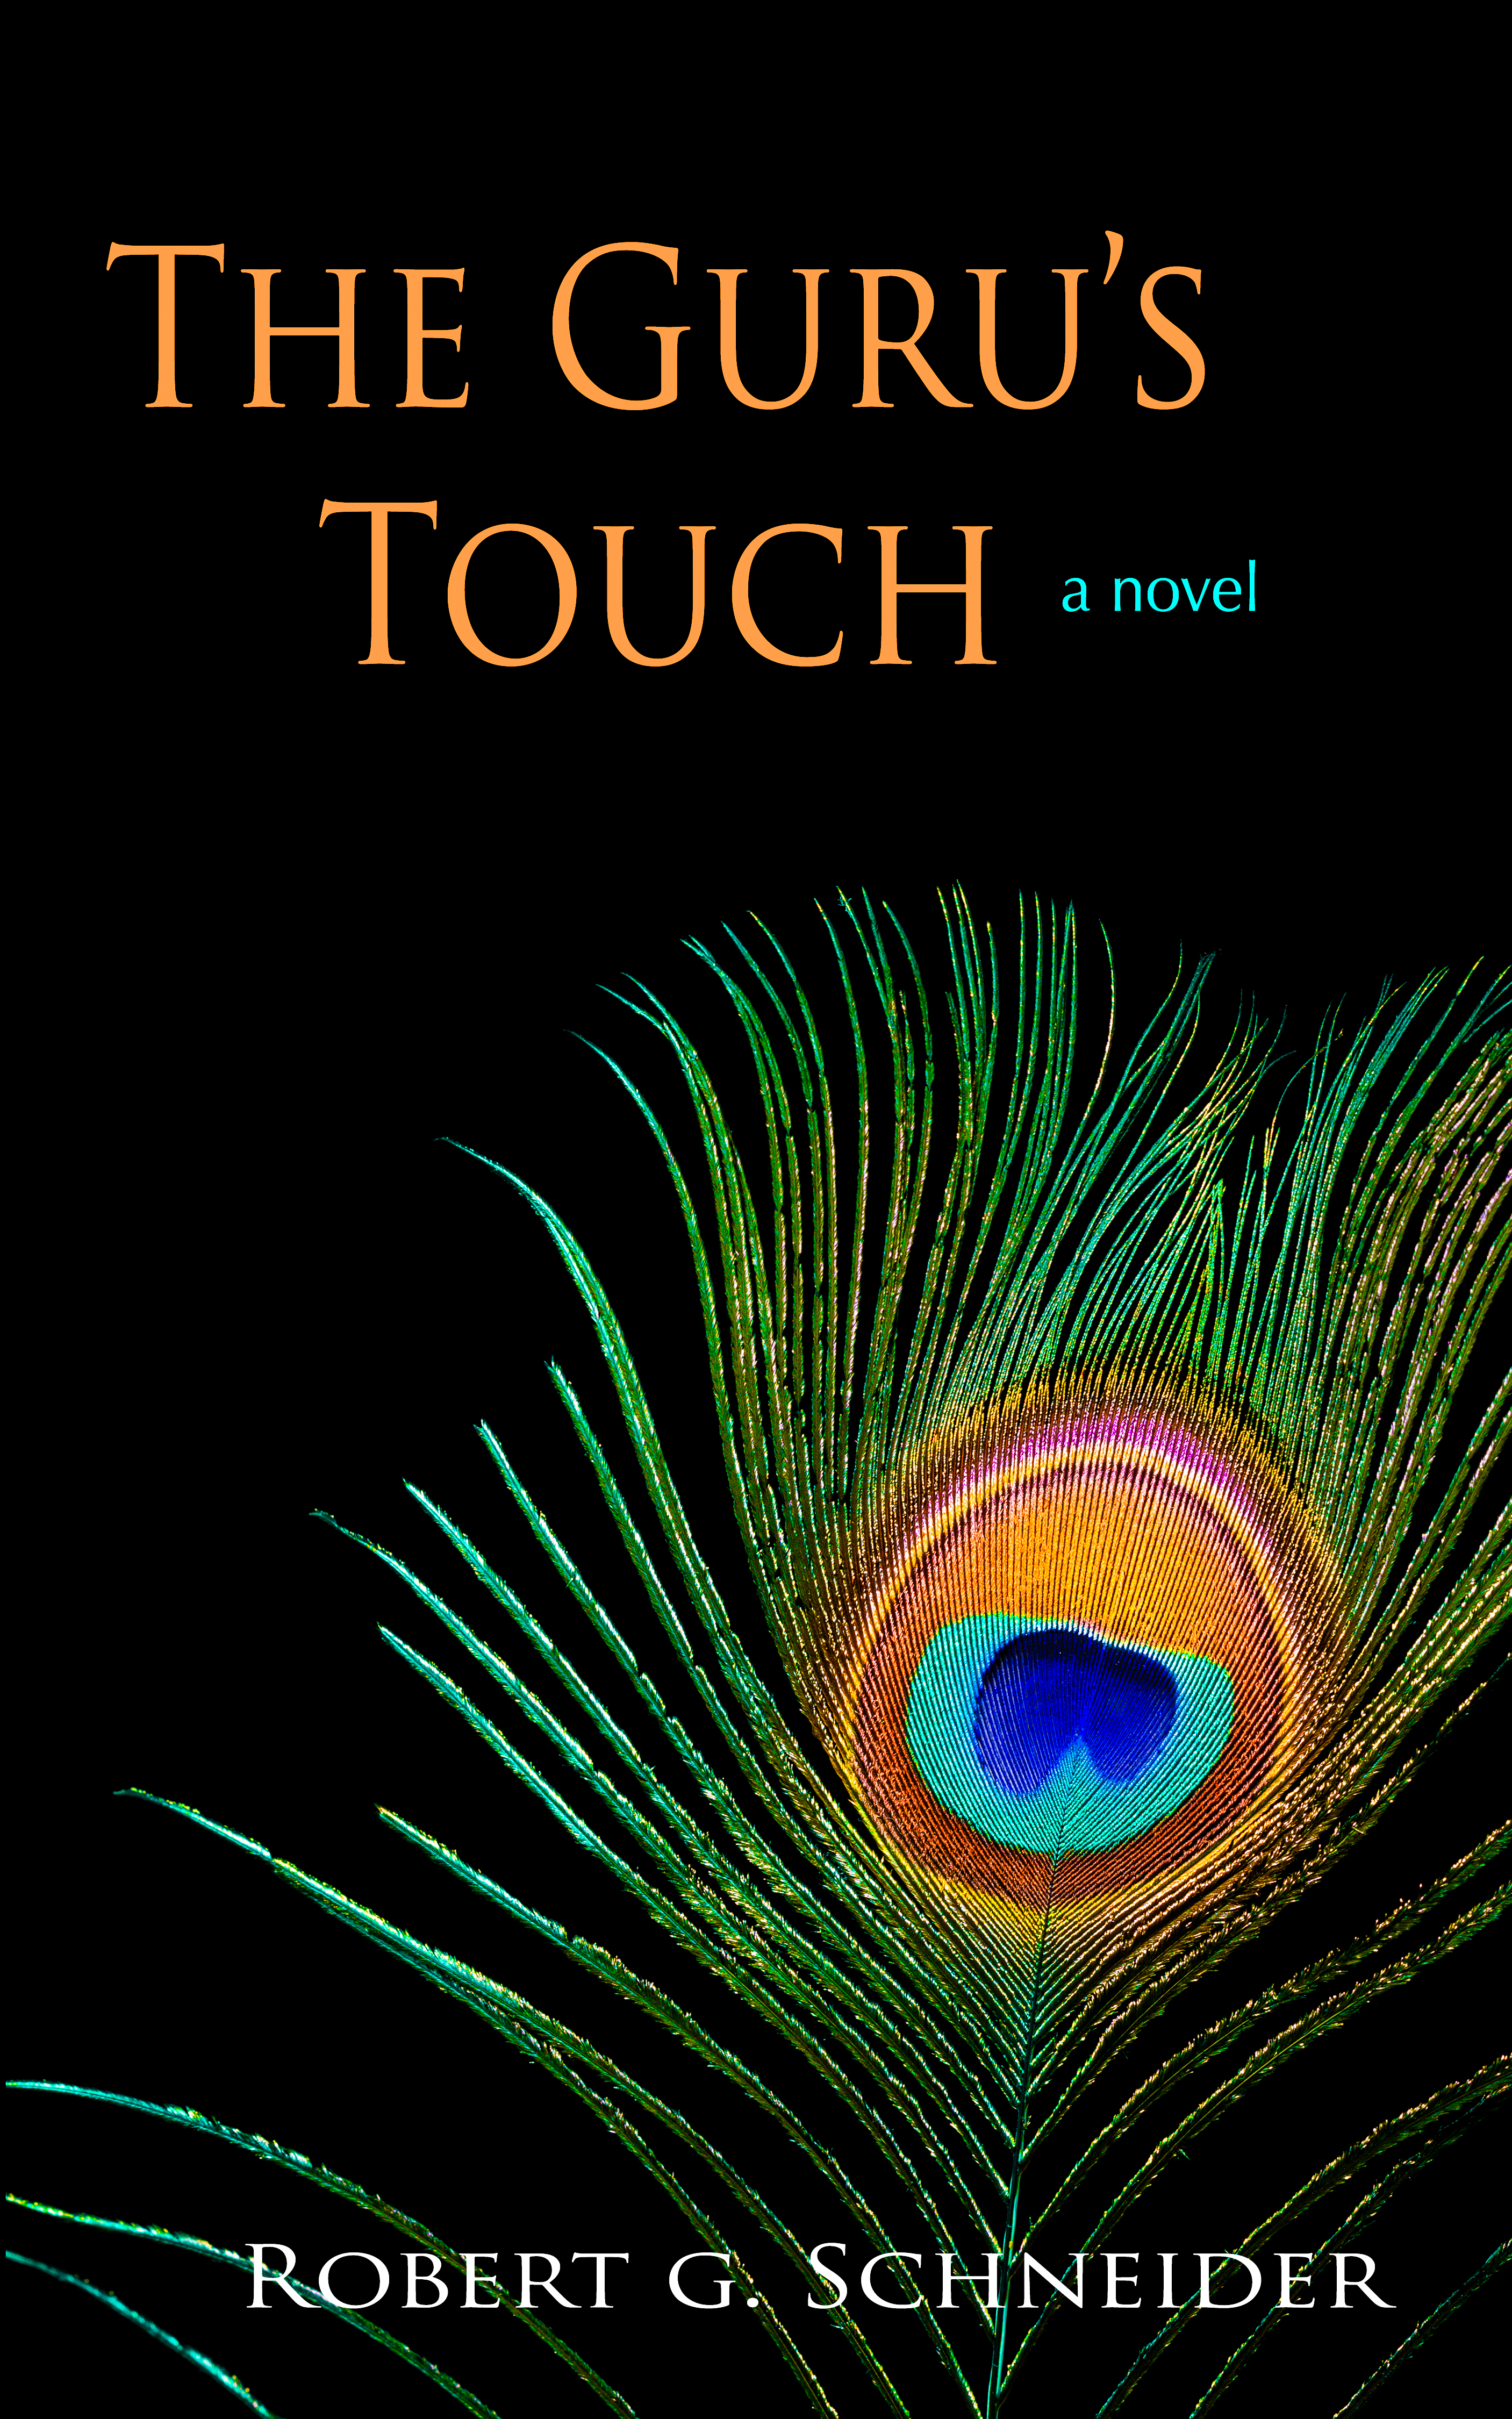 The Guru's Touch: a novel